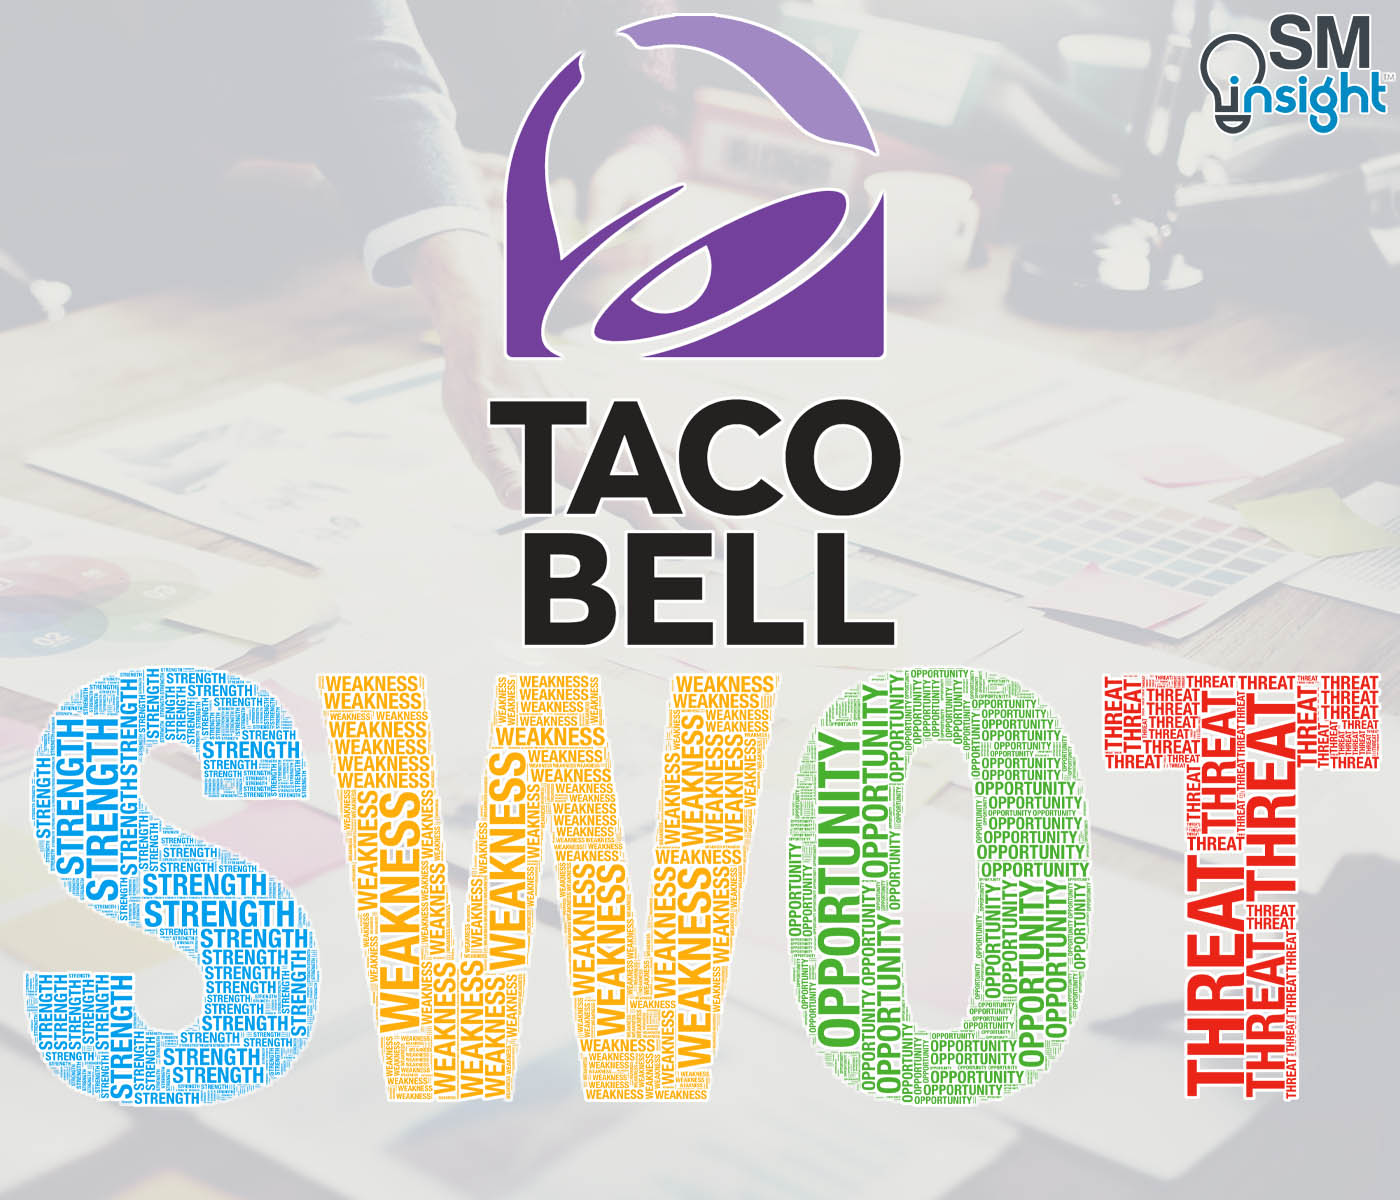 Taco Bell Swot